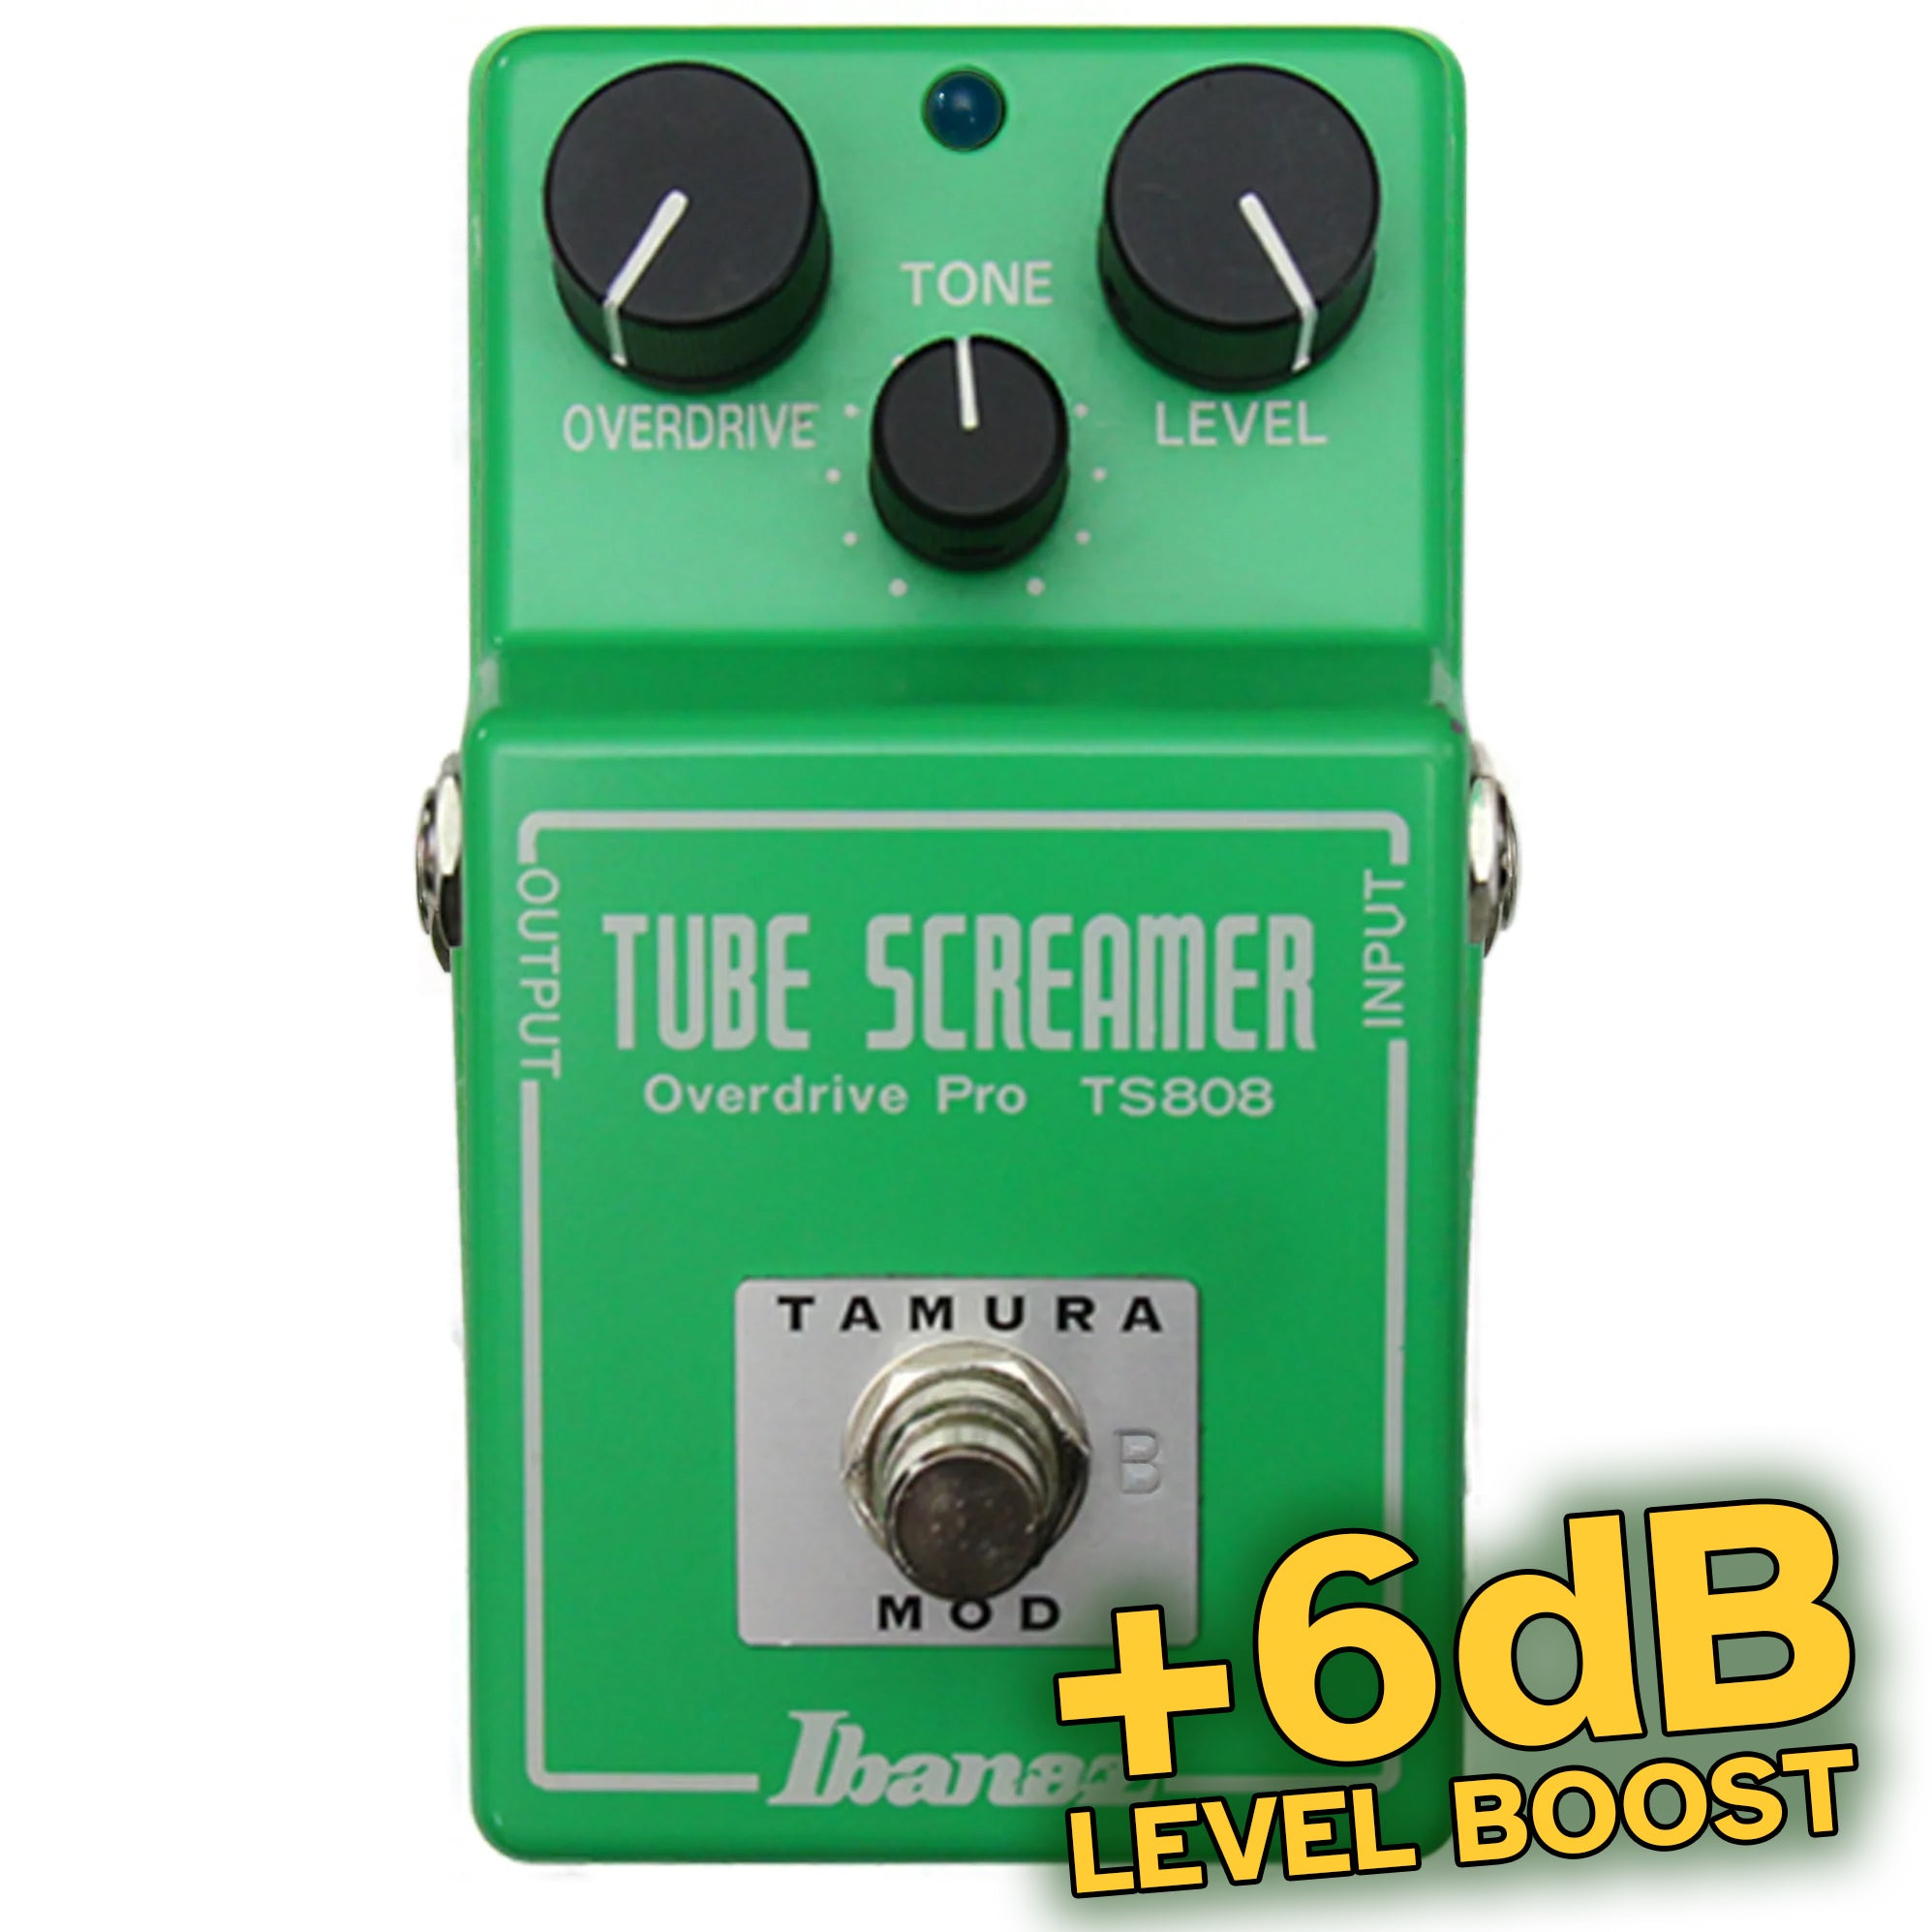 TAMURA-MOD TS808 Tube Screamer (TS808TM) – Godlyke 